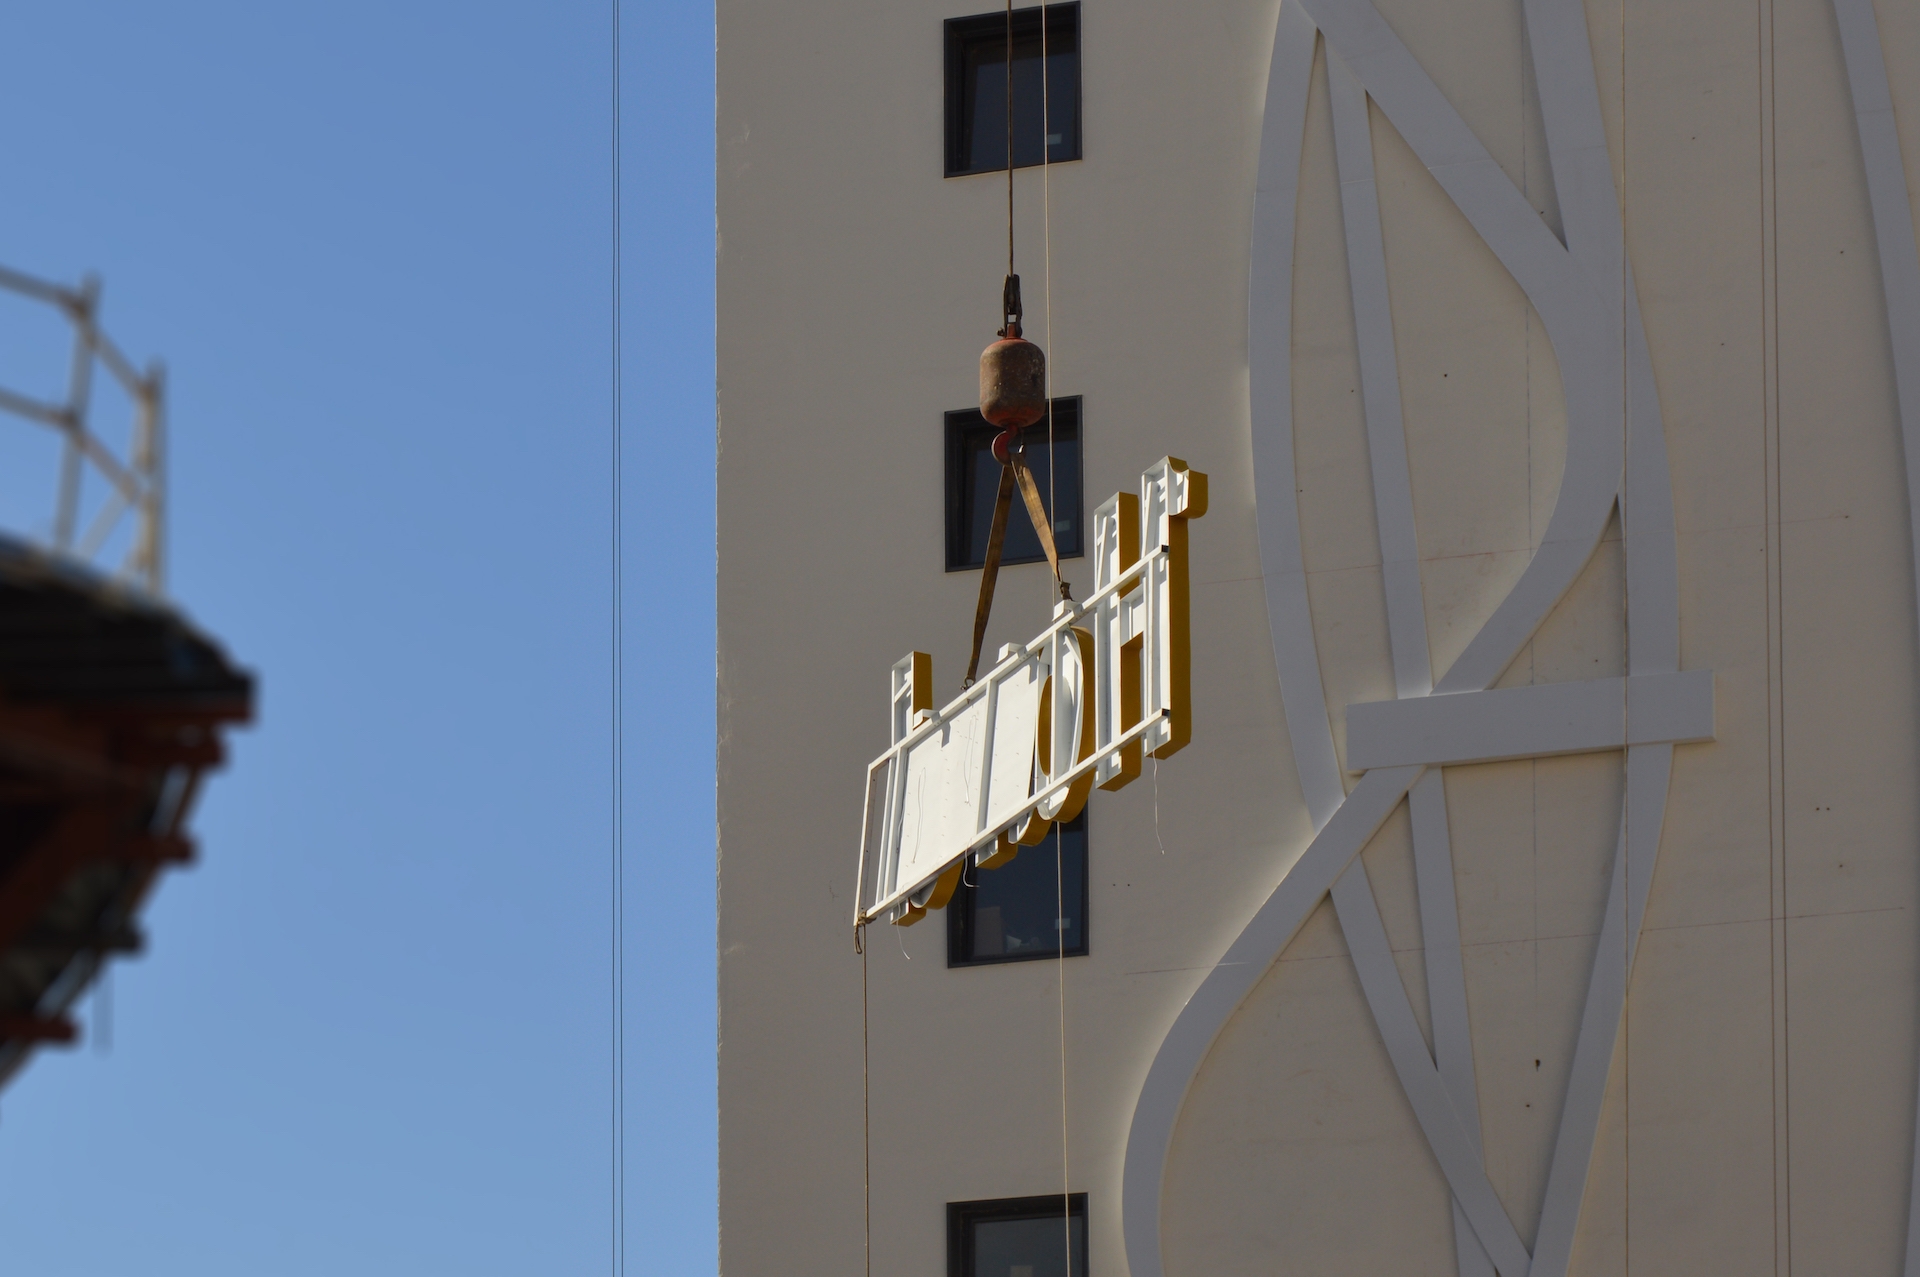 Lógistca e instalacion de luminosos corpóreos, Hard Rock Hotel Tenerife